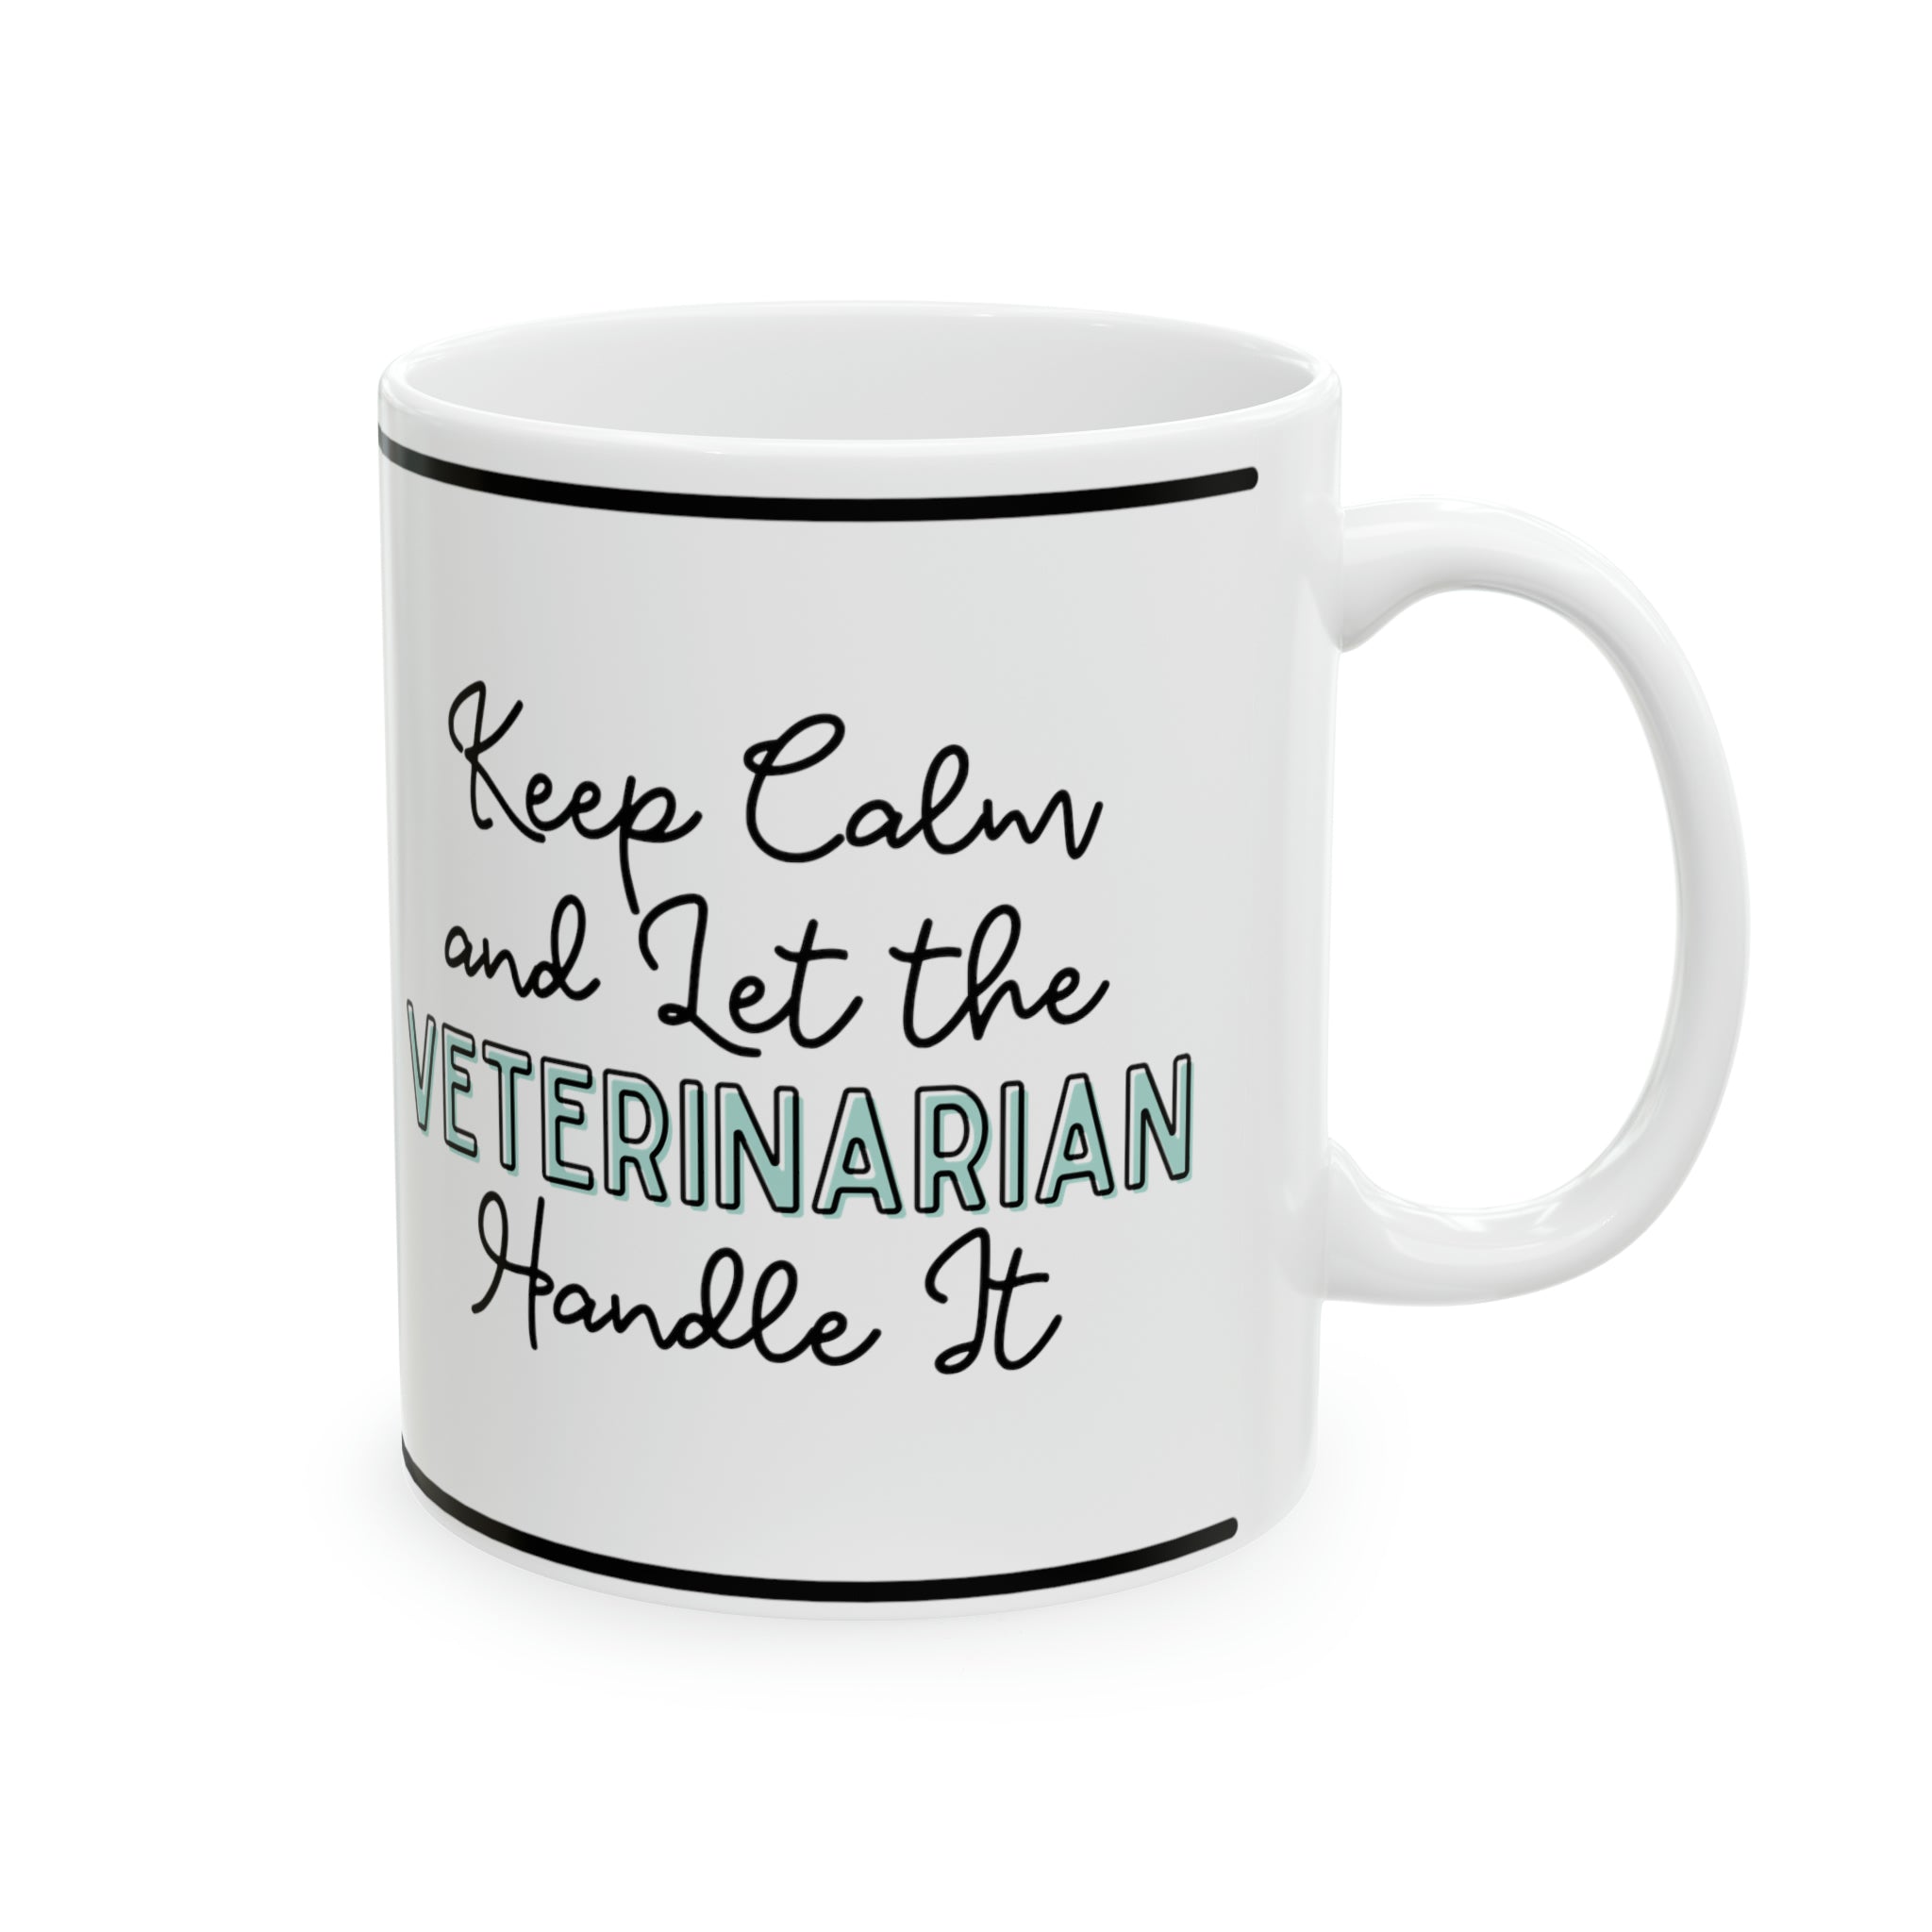 Keep Calm and let the Veterinarian Handle It - Ceramic Mug, 11oz